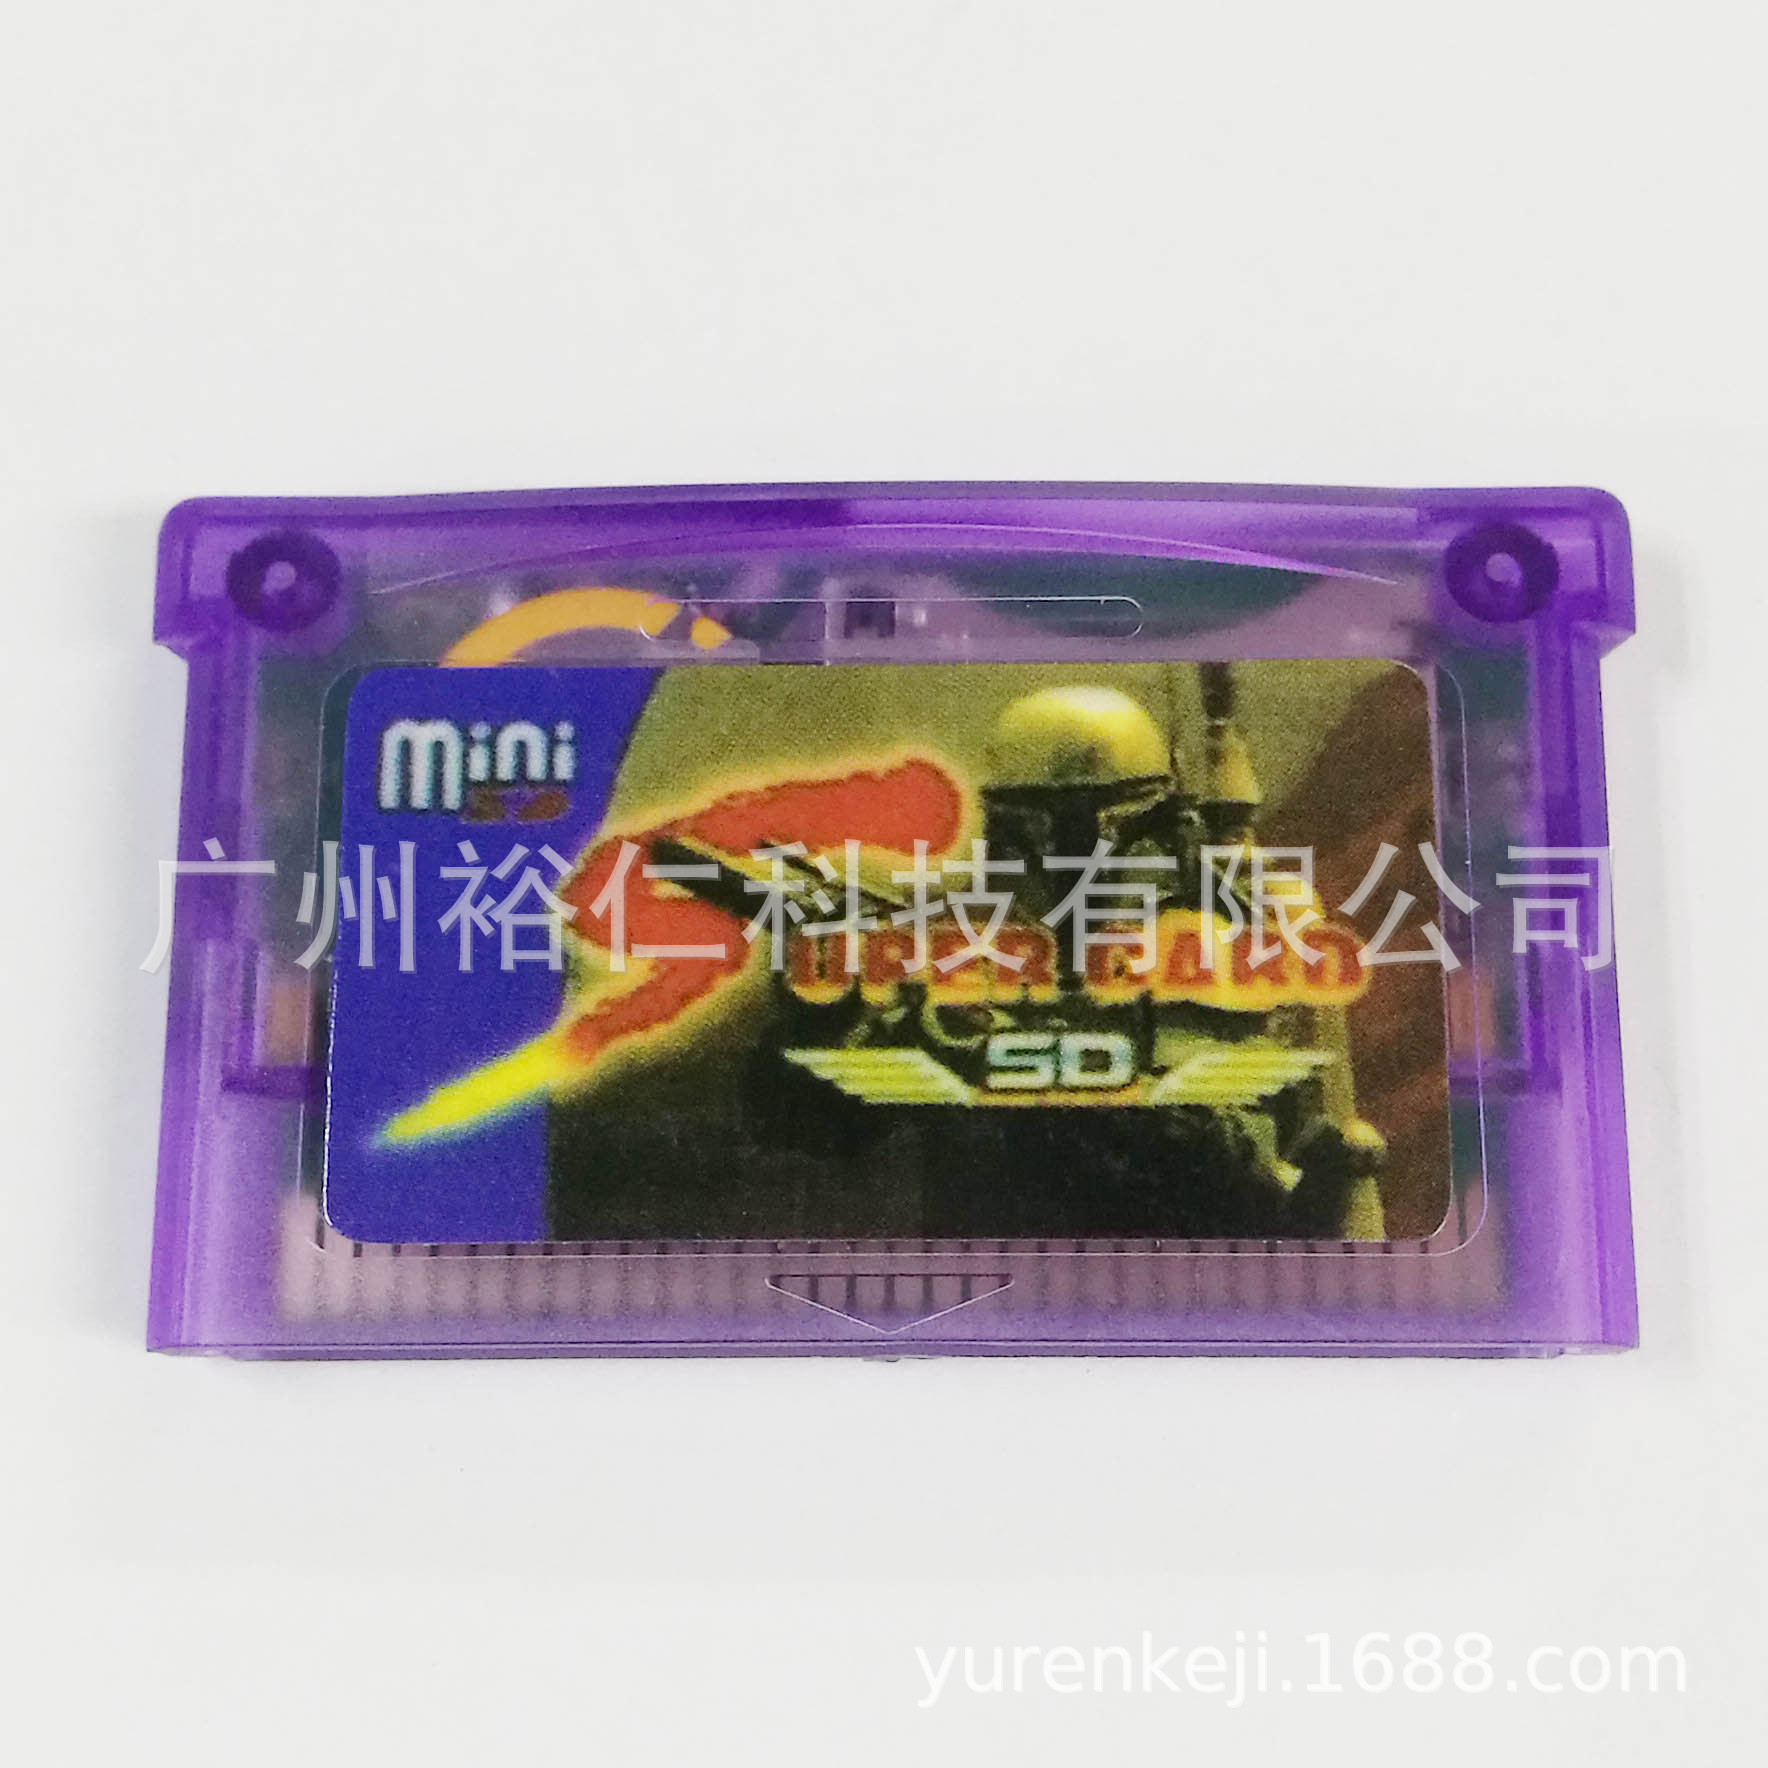 mini super card烧录卡GBA GBM游戏卡GBASP烧录卡NDS游戏卡全新